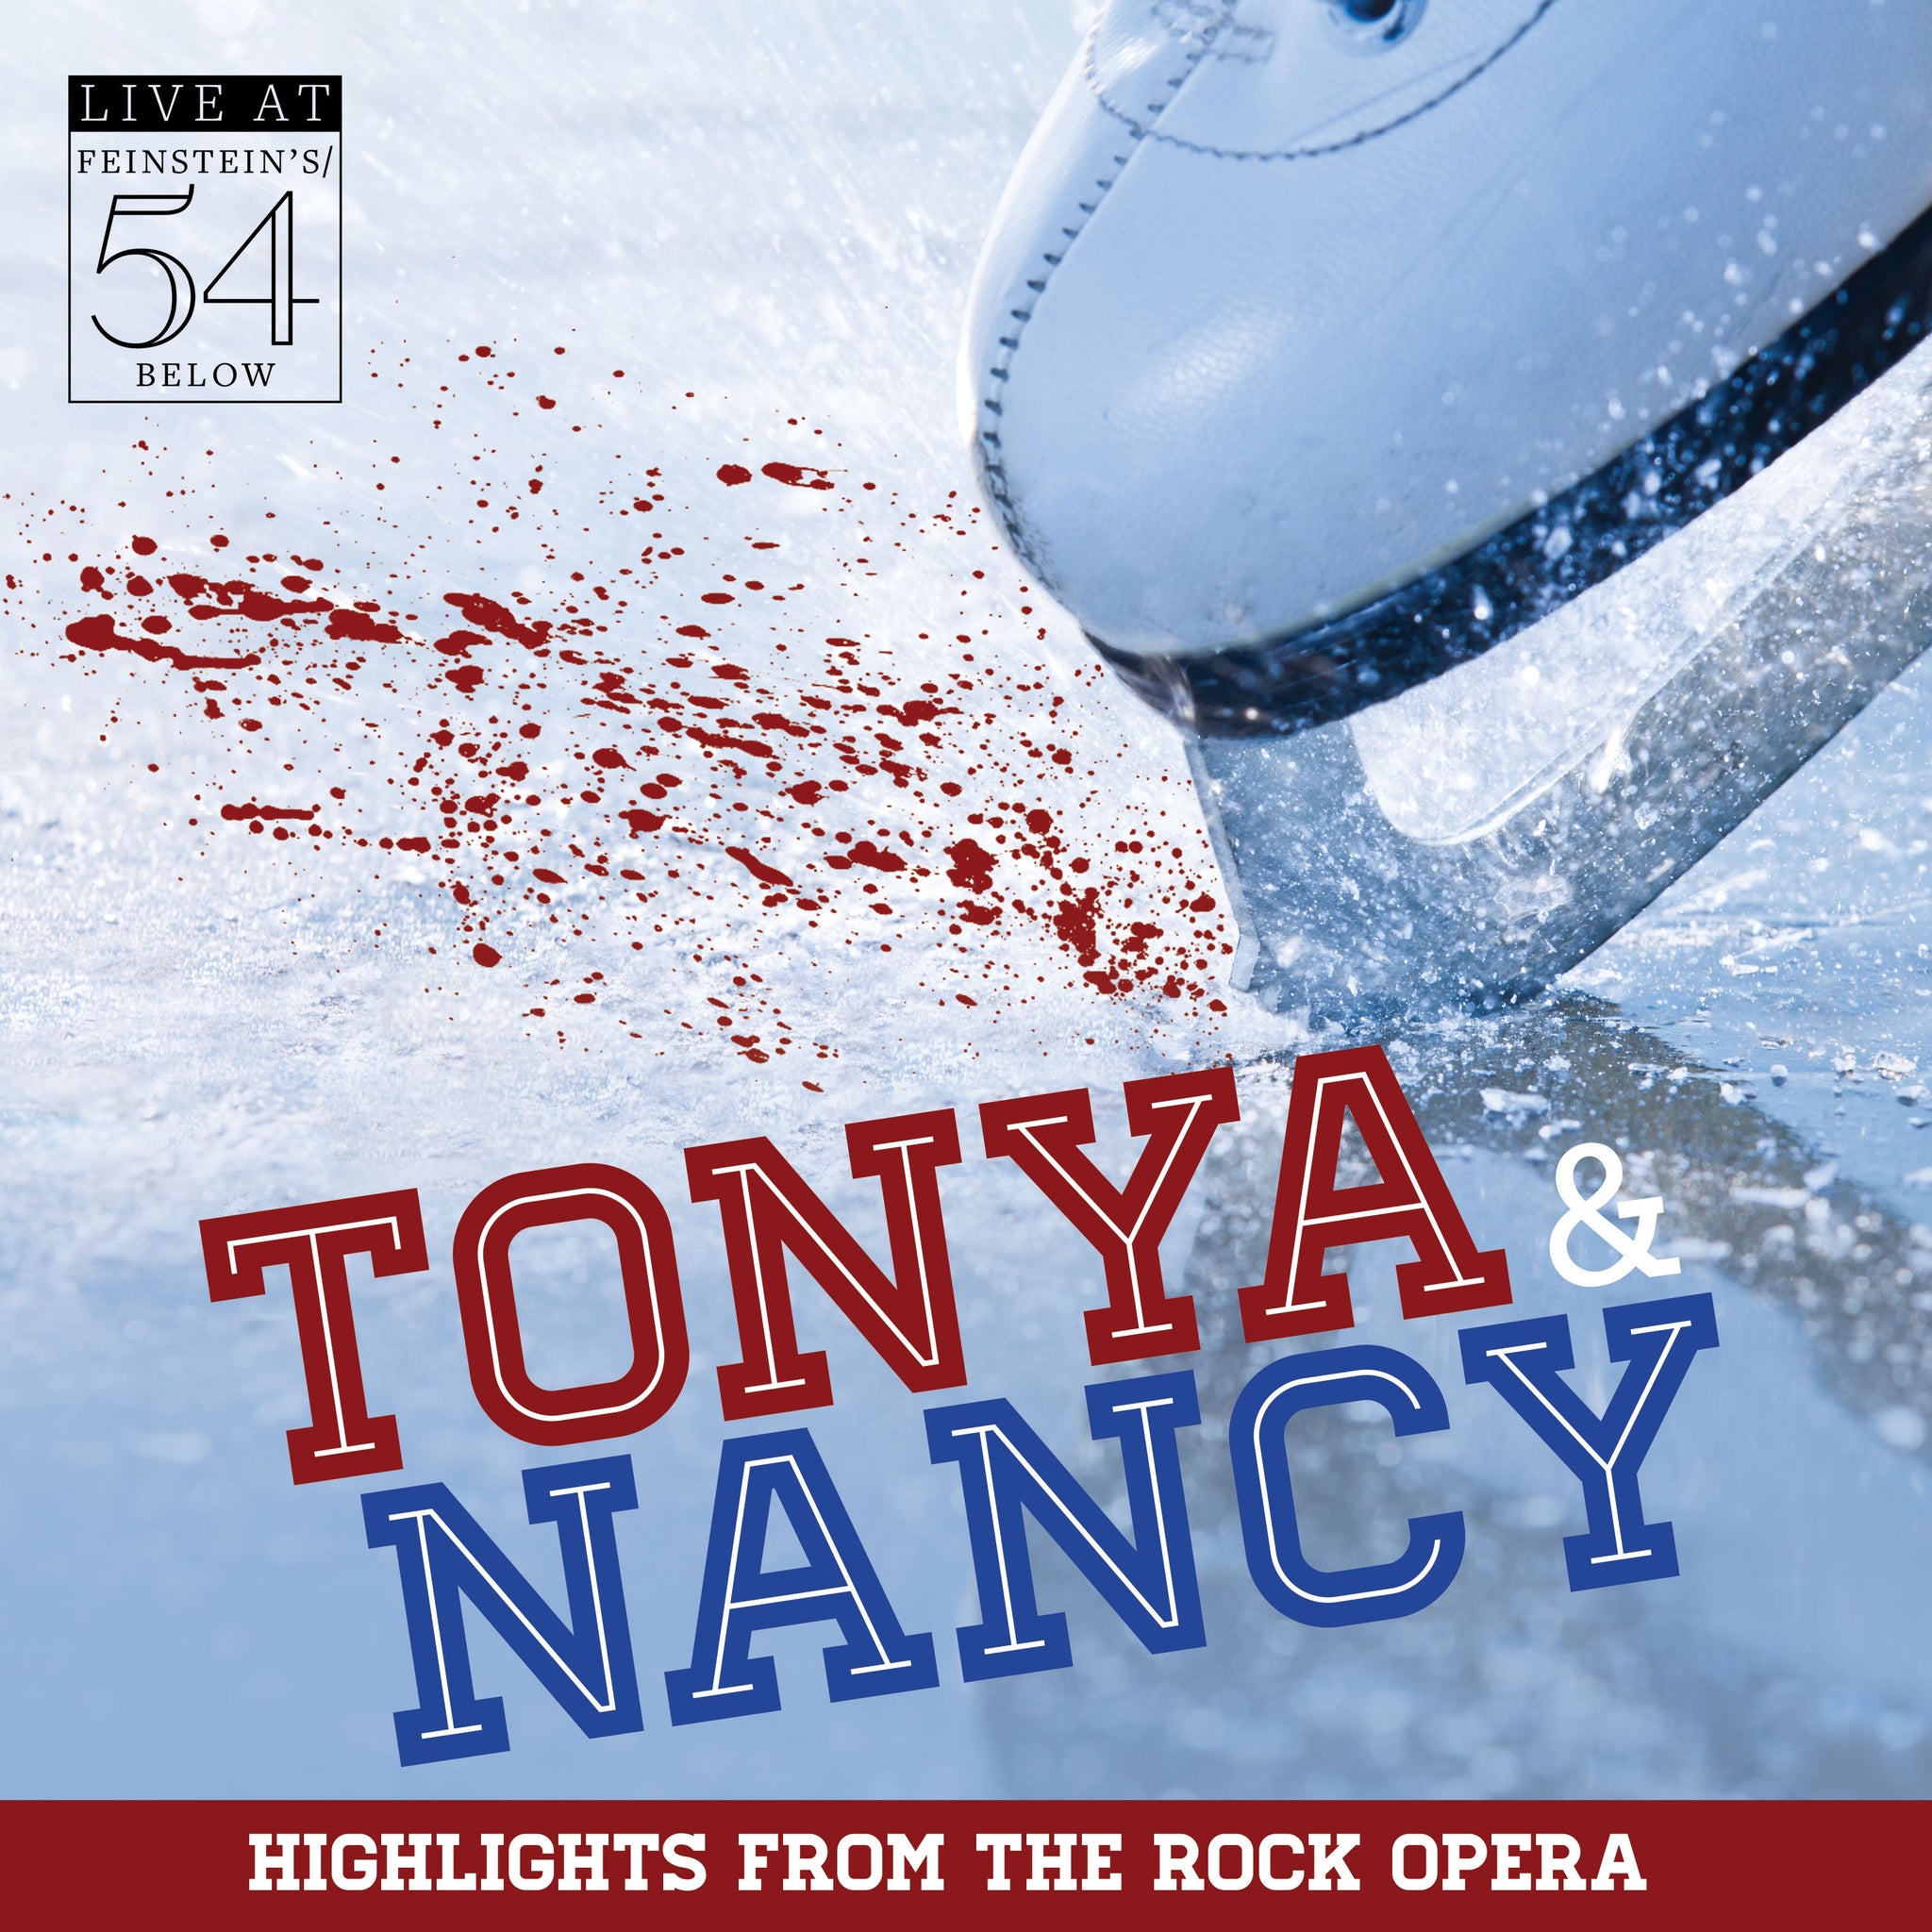 Tonya & Nancy (Highlights from the Rock Opera): Live at Feinstein's / 54 Below [MP3]